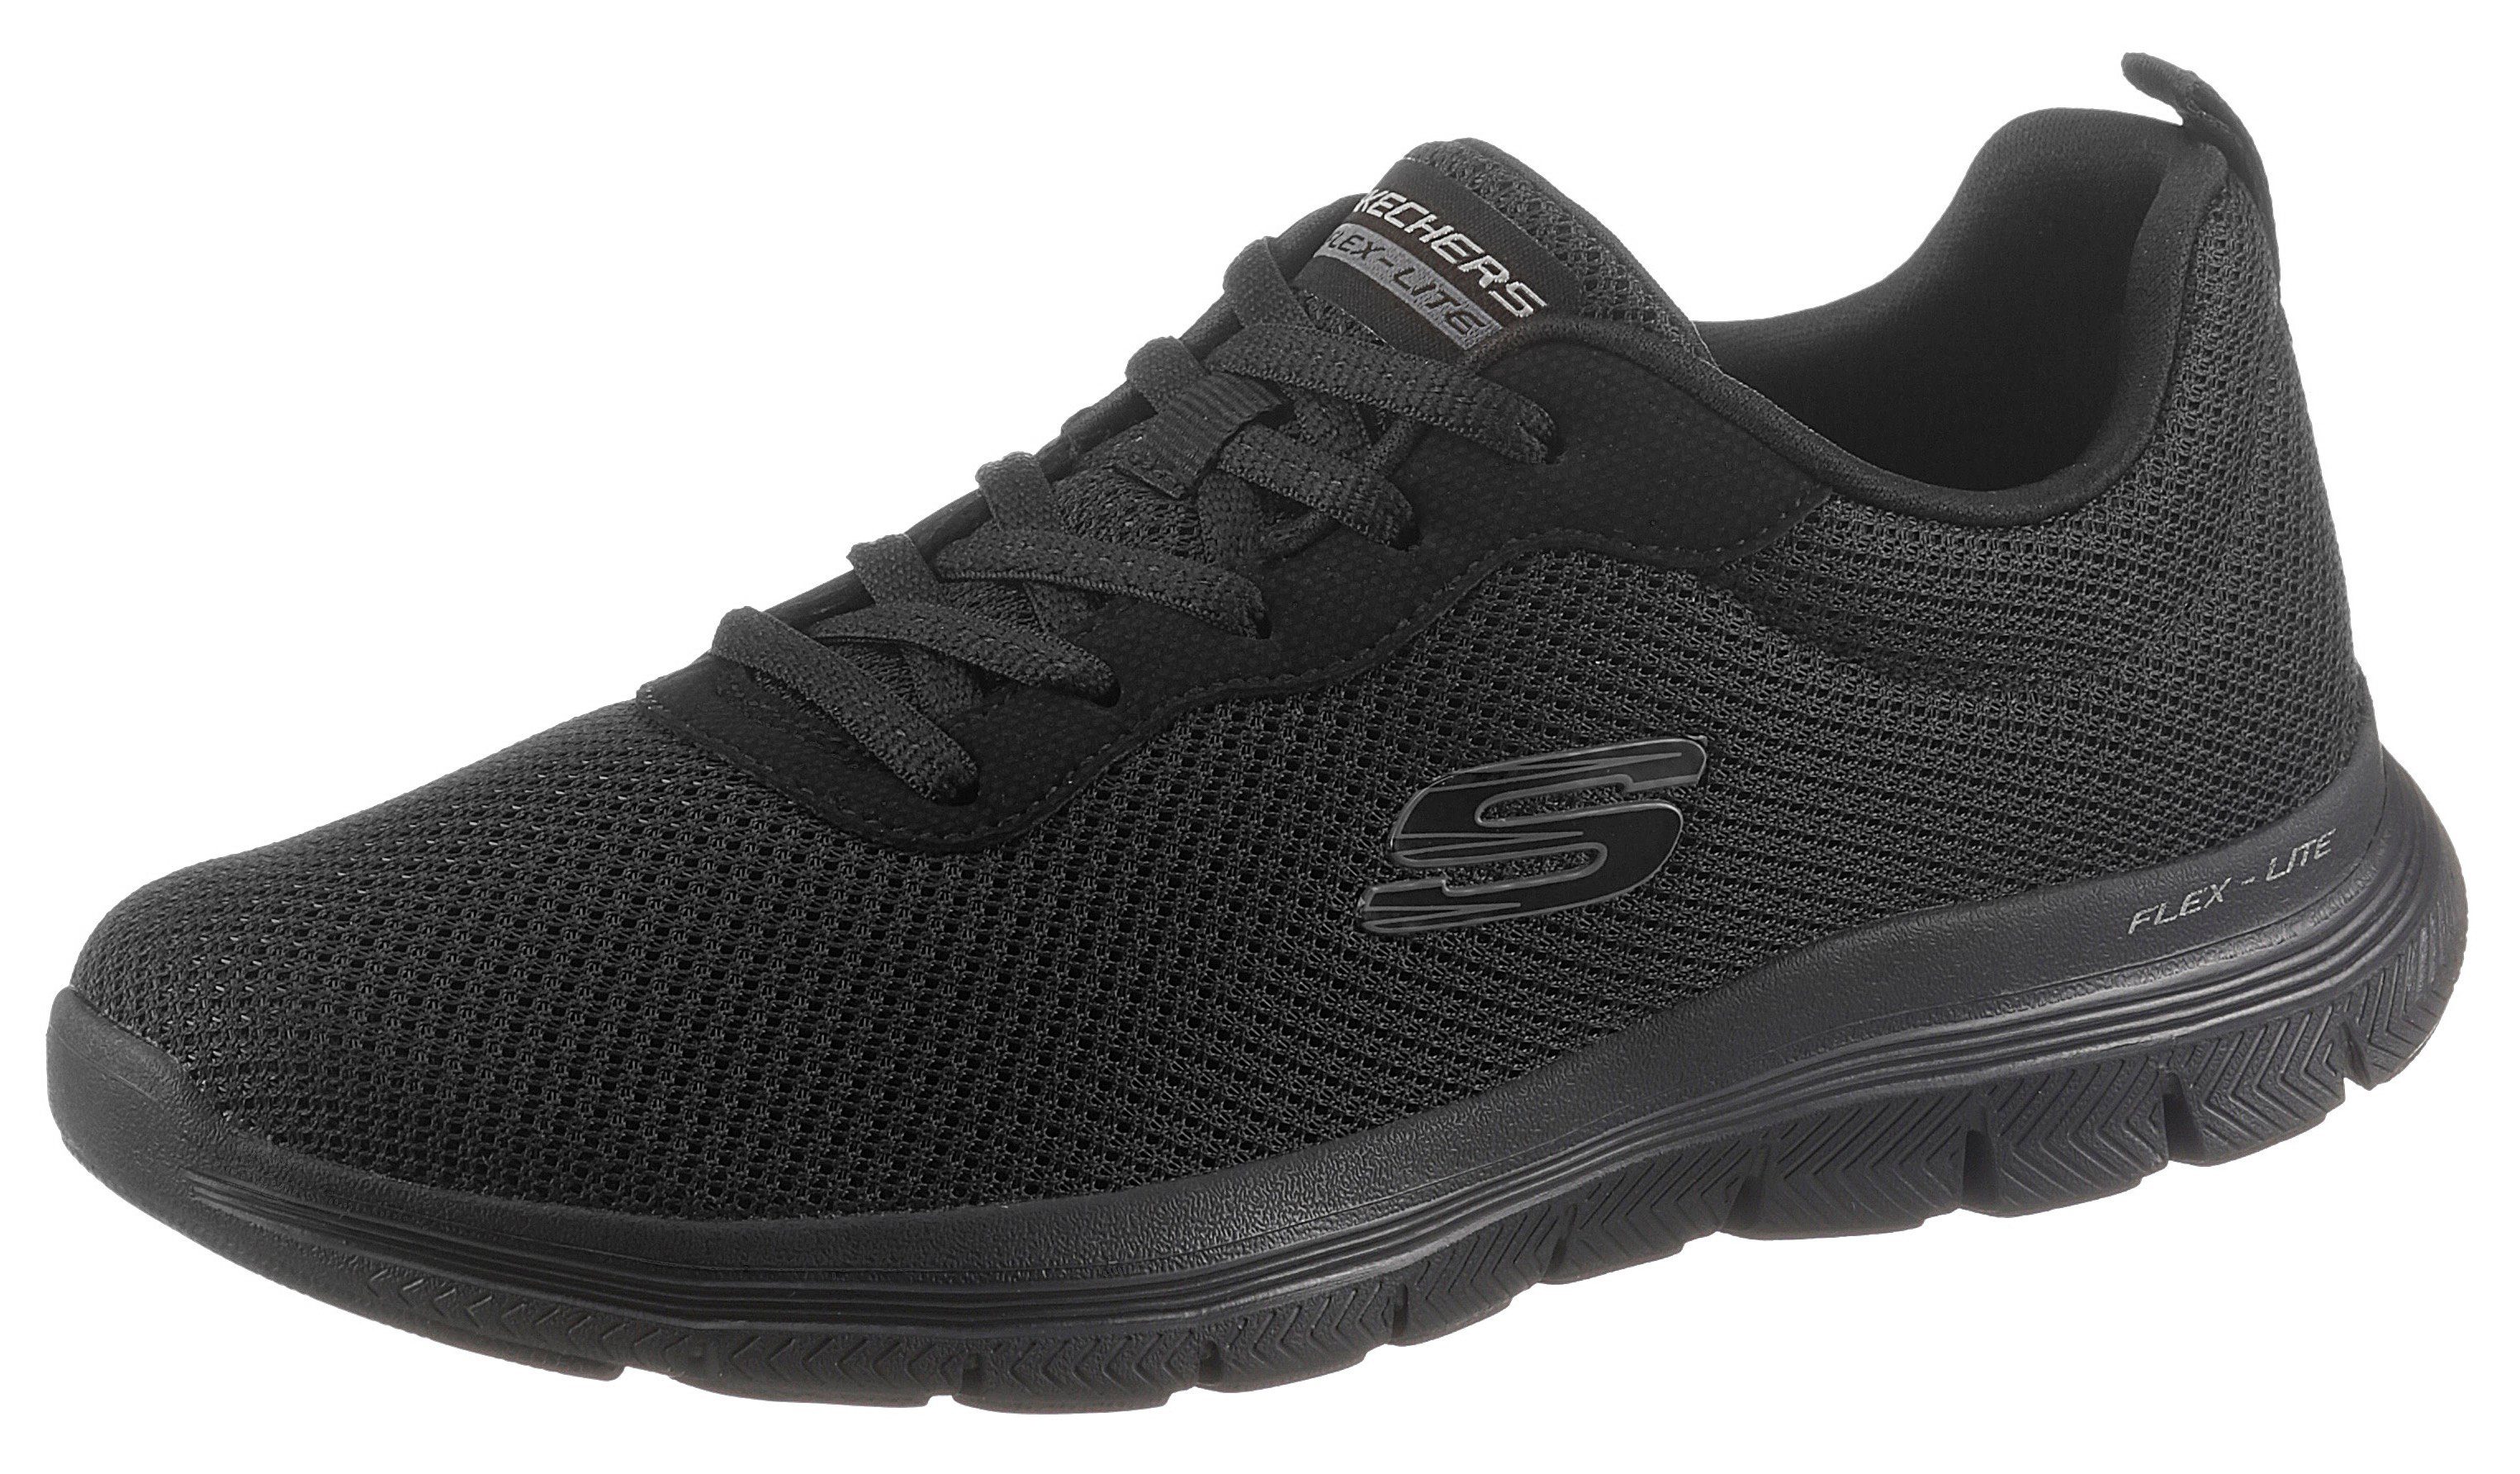 Sneaker BRILLINAT 4.0 Ausstattung schwarz FLEX Foam VIEW Air-Cooled APPEAL Memory mit Skechers